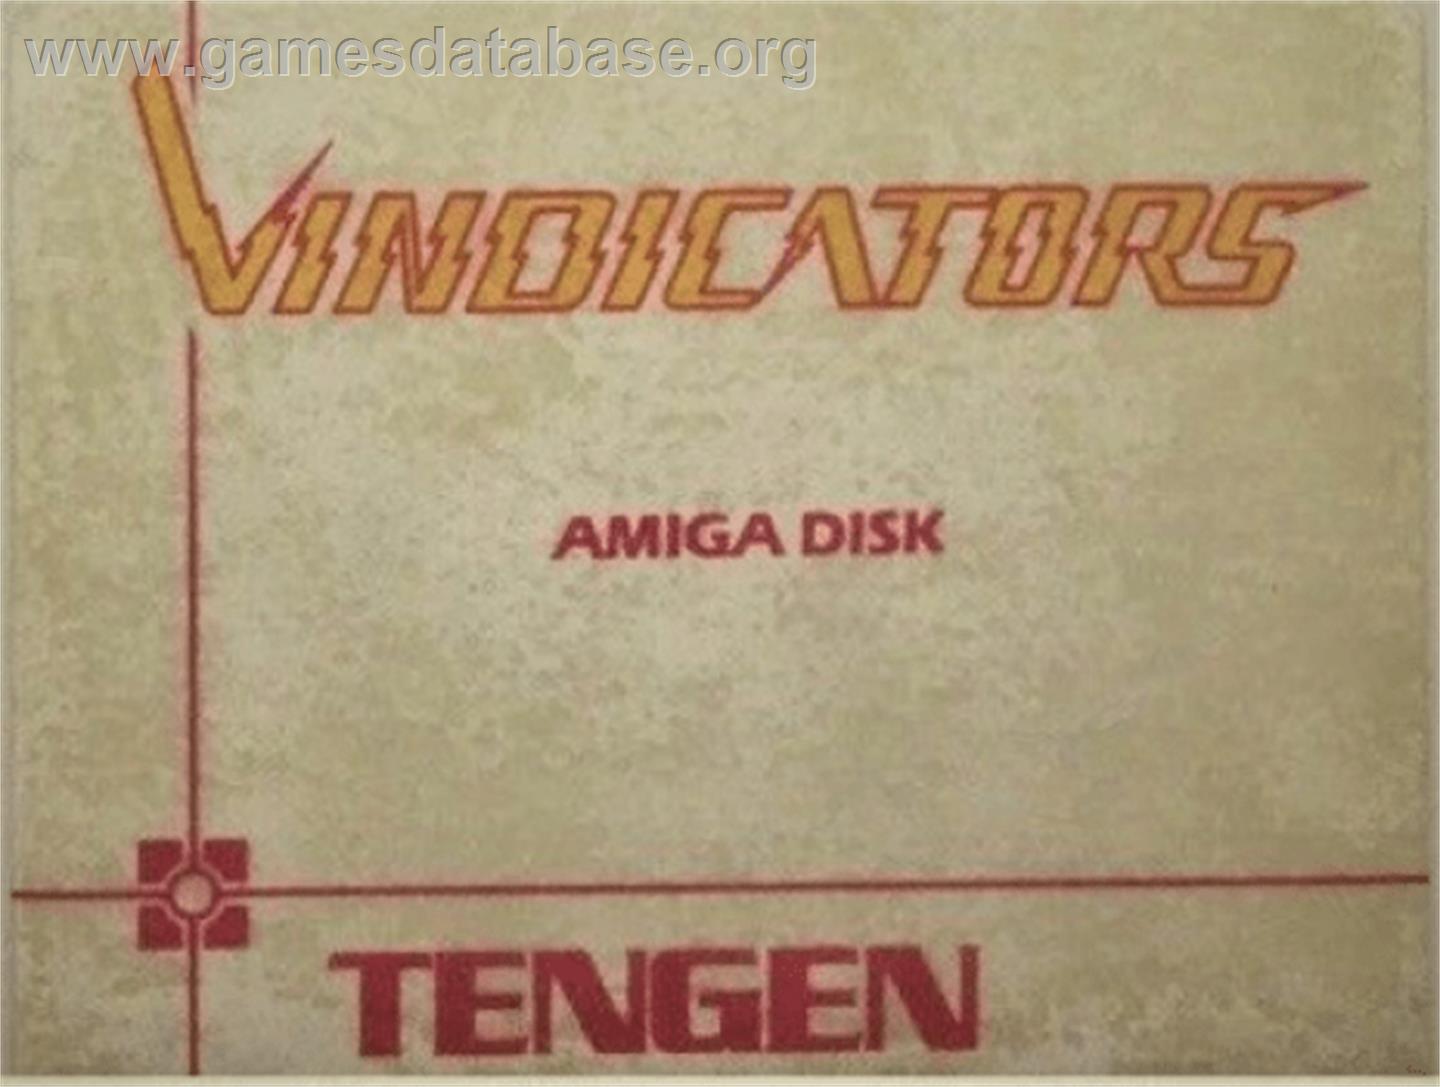 Vindicators - Commodore Amiga - Artwork - Cartridge Top